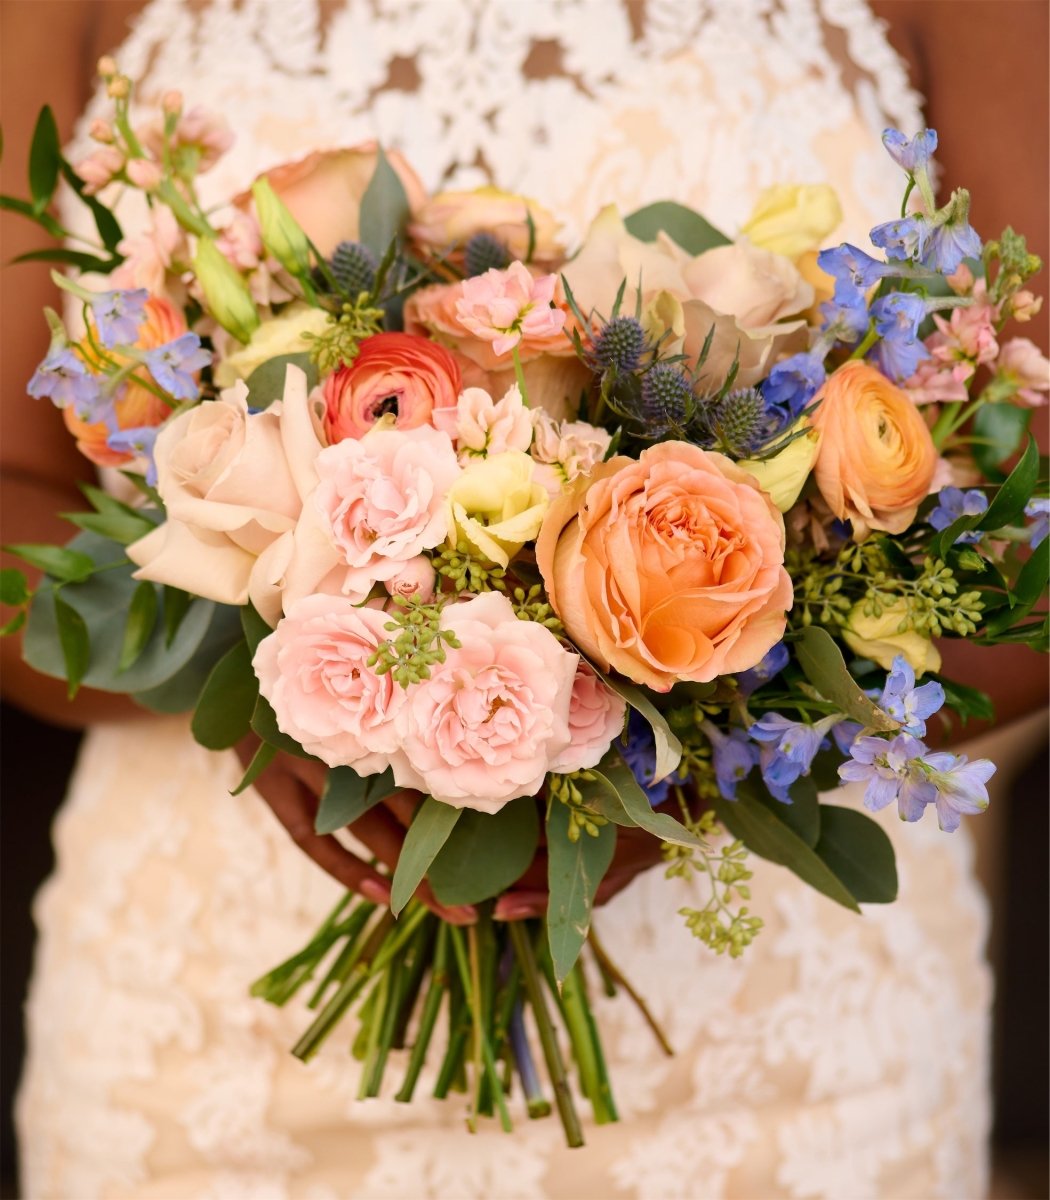 Bridal Bouquet Lush Colorful - Flowers for Dreams